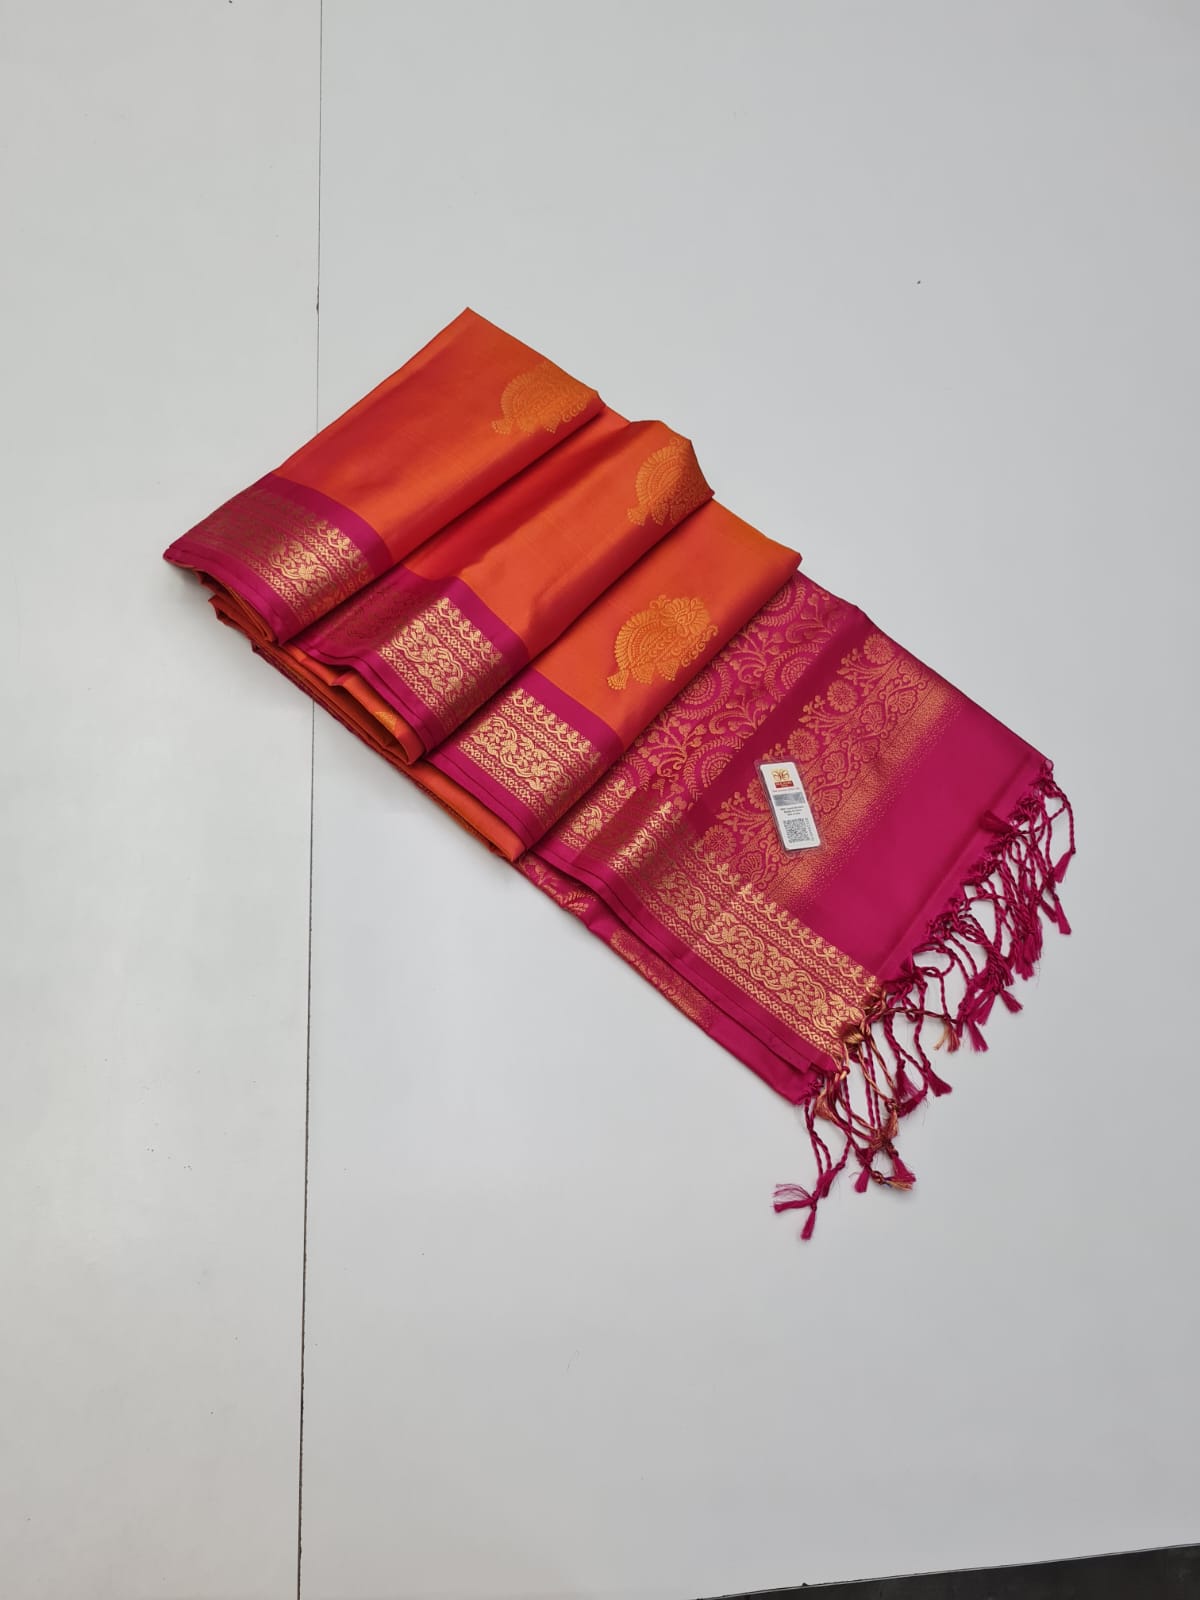 Pure Handloom Kanchipuram Jacquard Border Soft Silk Saree